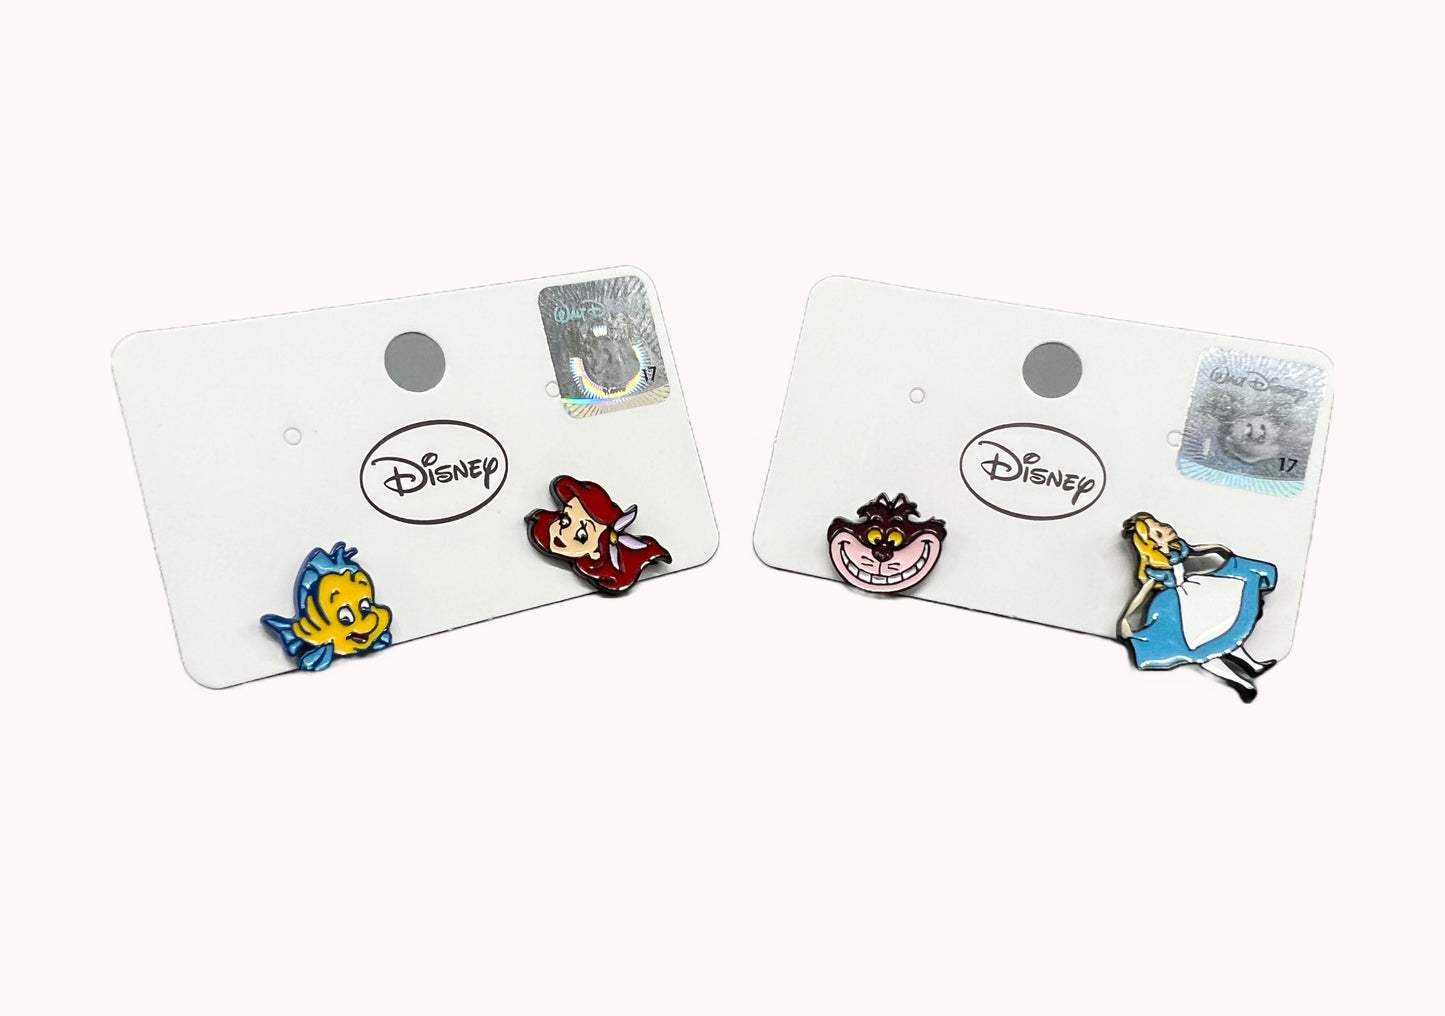 Disney-licensed Little mermaid and Alice in Wonderland earrings, Alice and Cheshire cat stud earrings